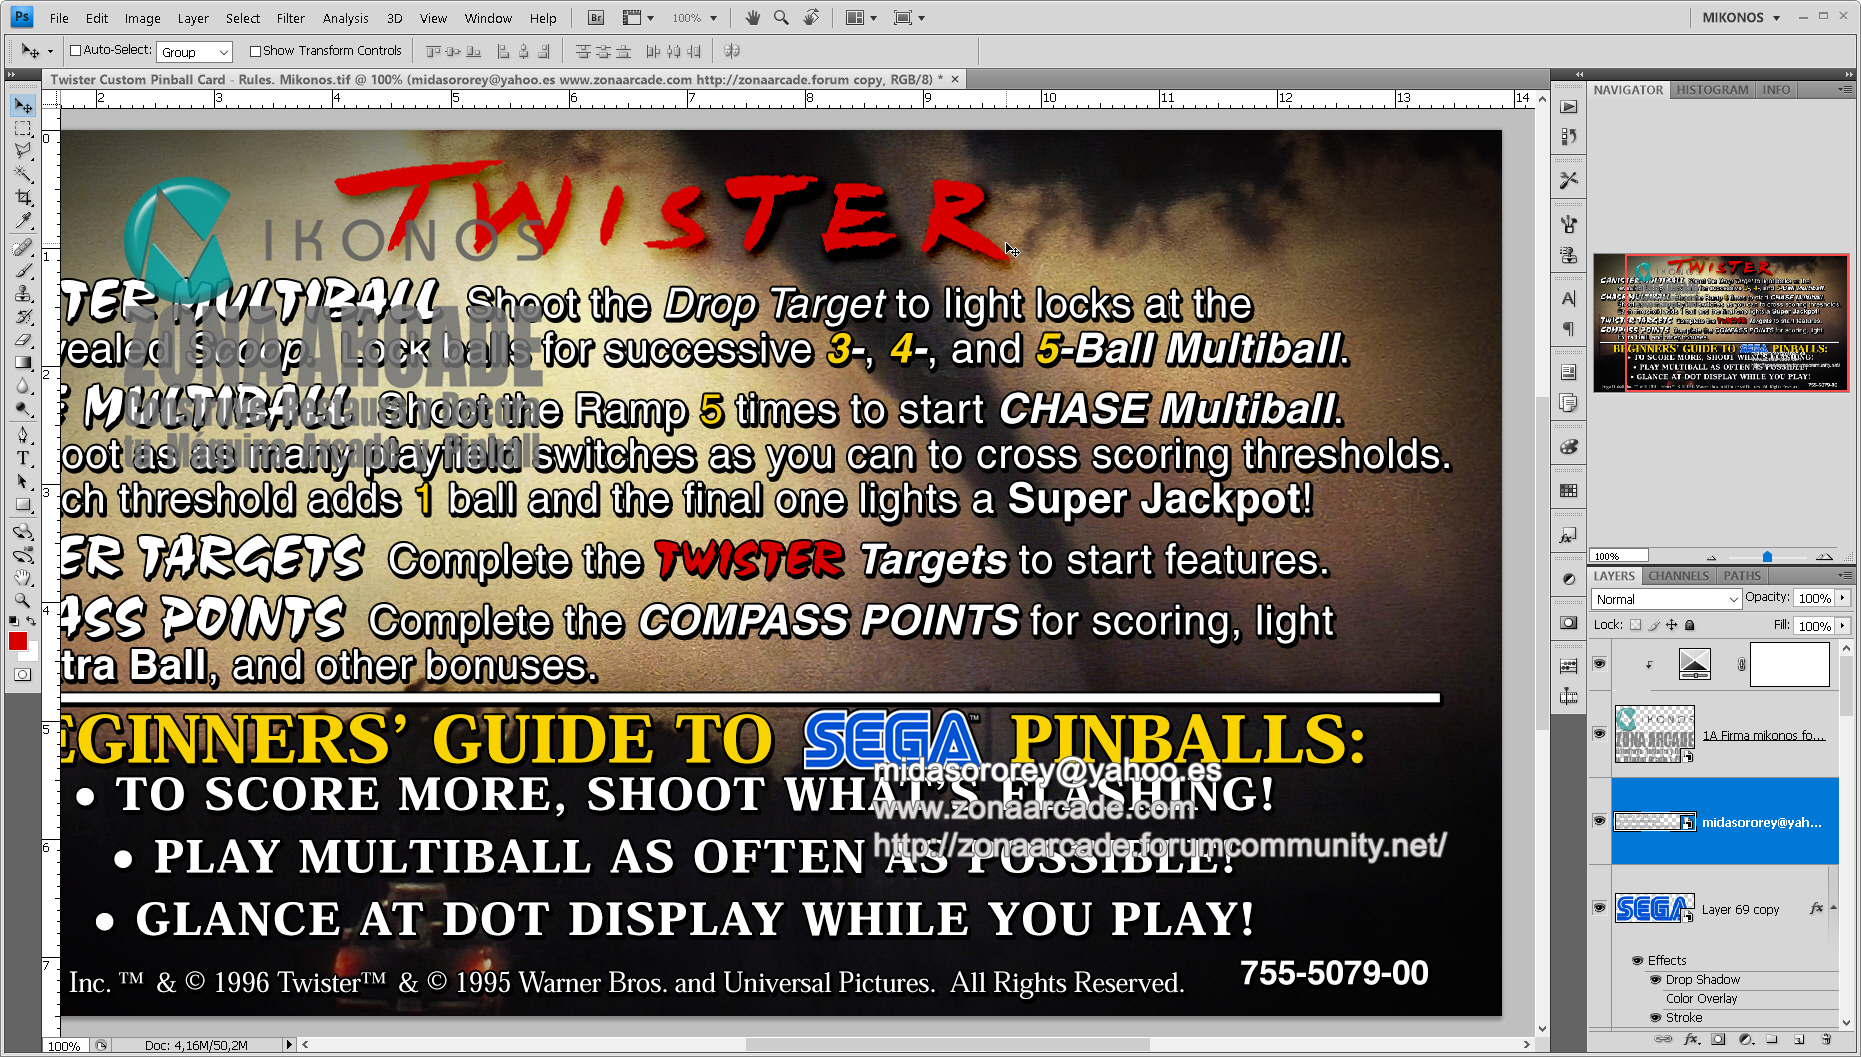 Twister Custom Pinball Card - Rules. Mikonos2